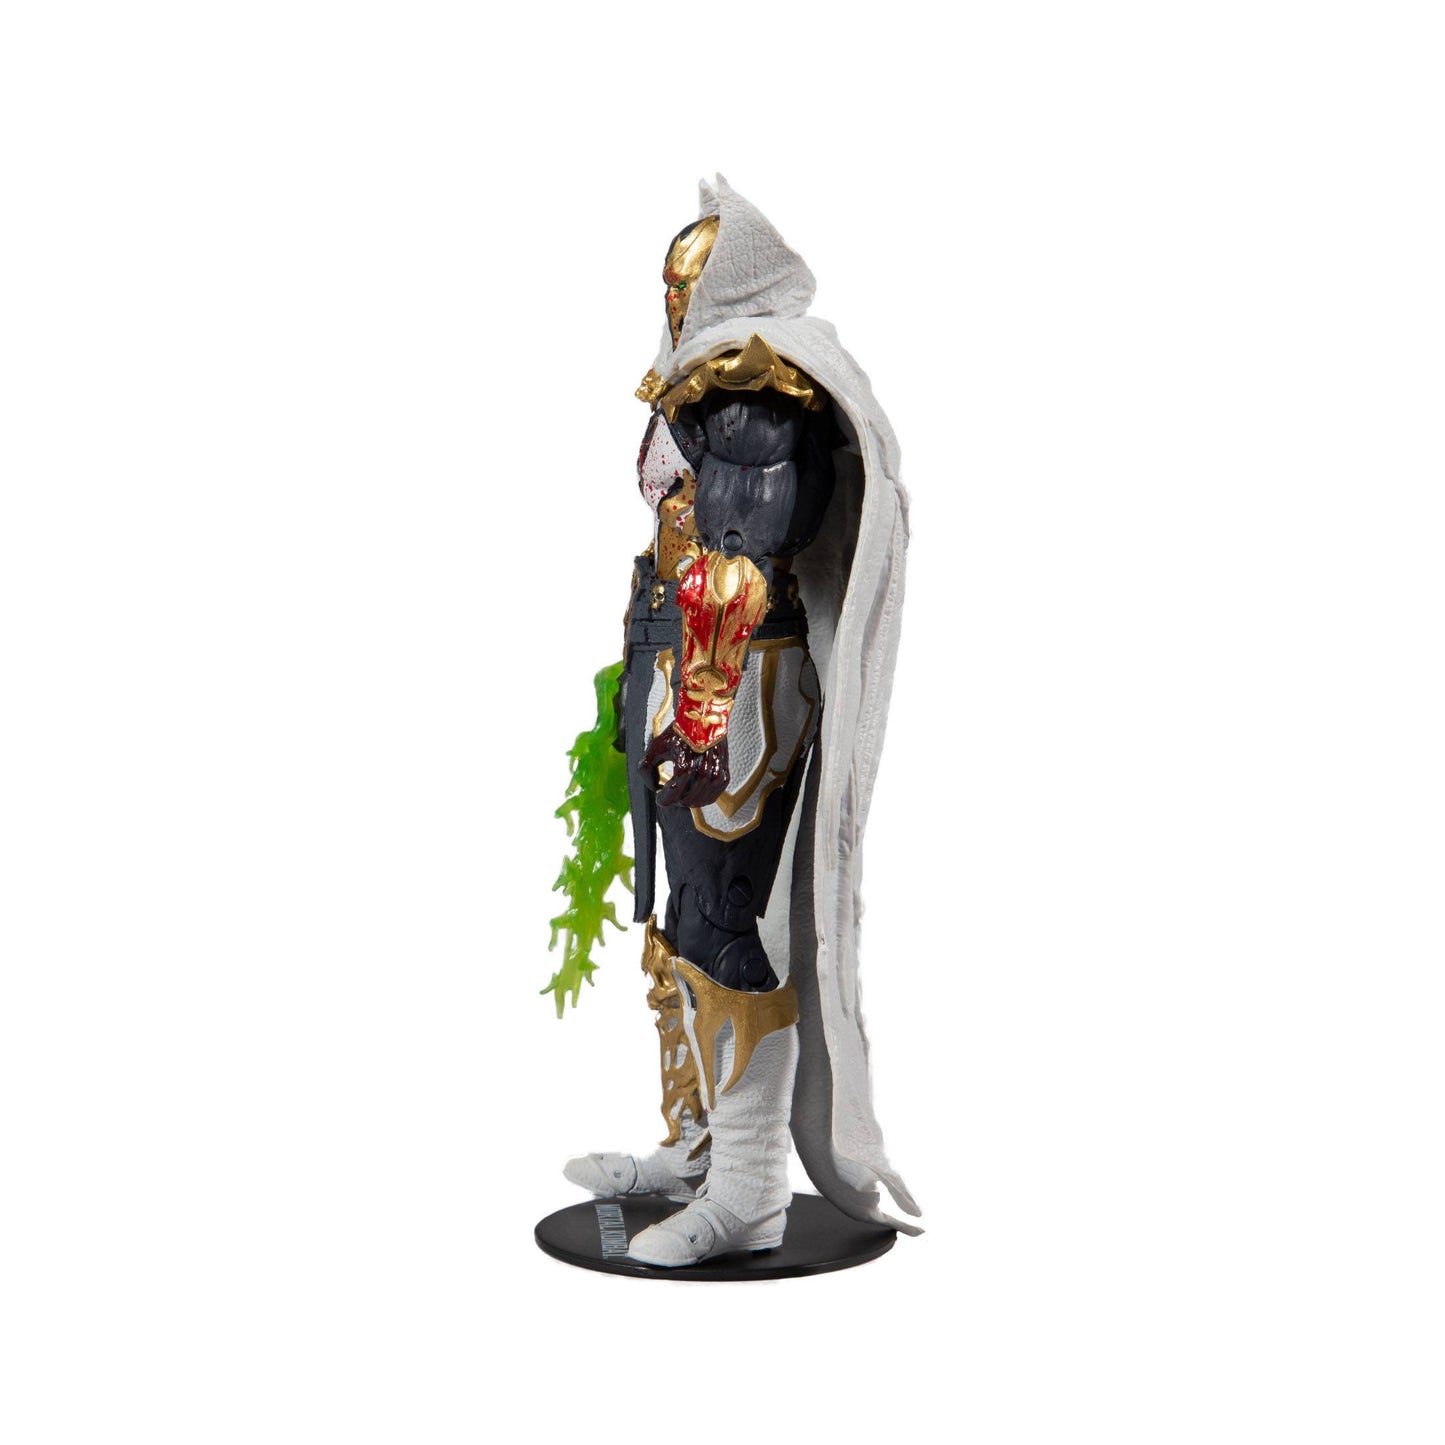 Malefik Spawn - Articulated figurine